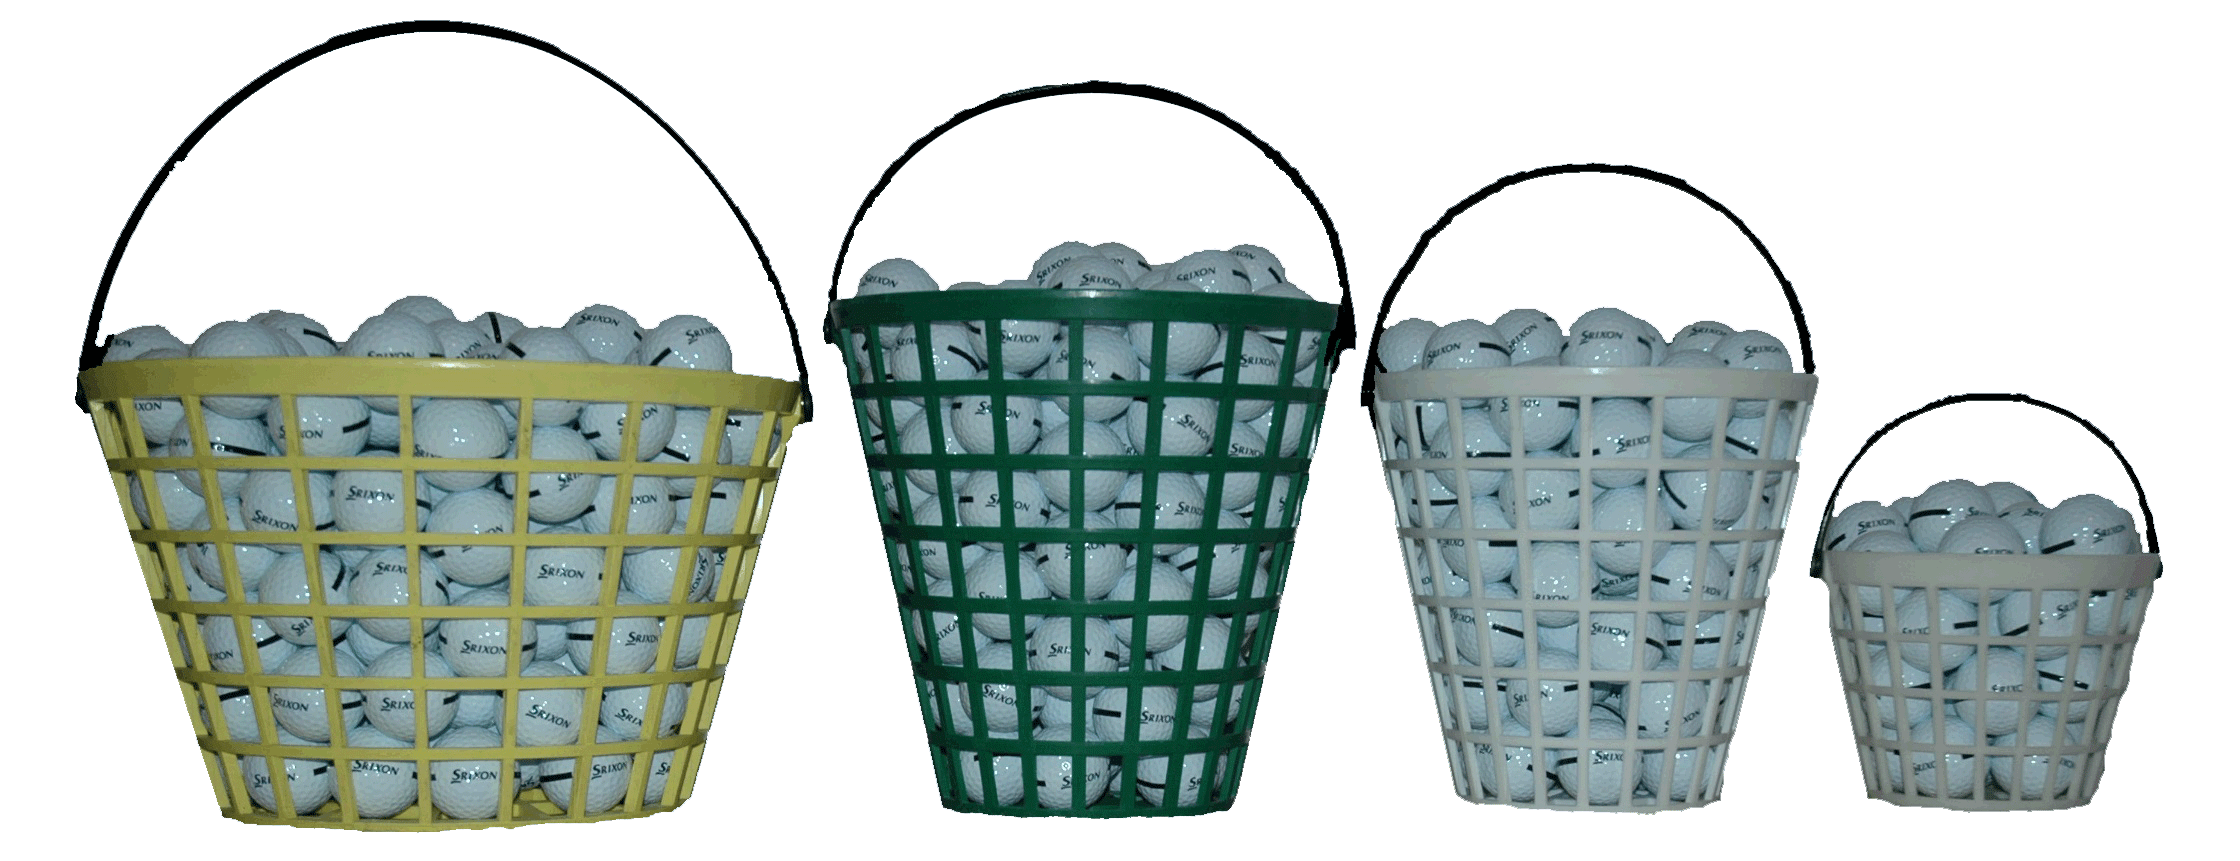 4 basket sizes of golf balls